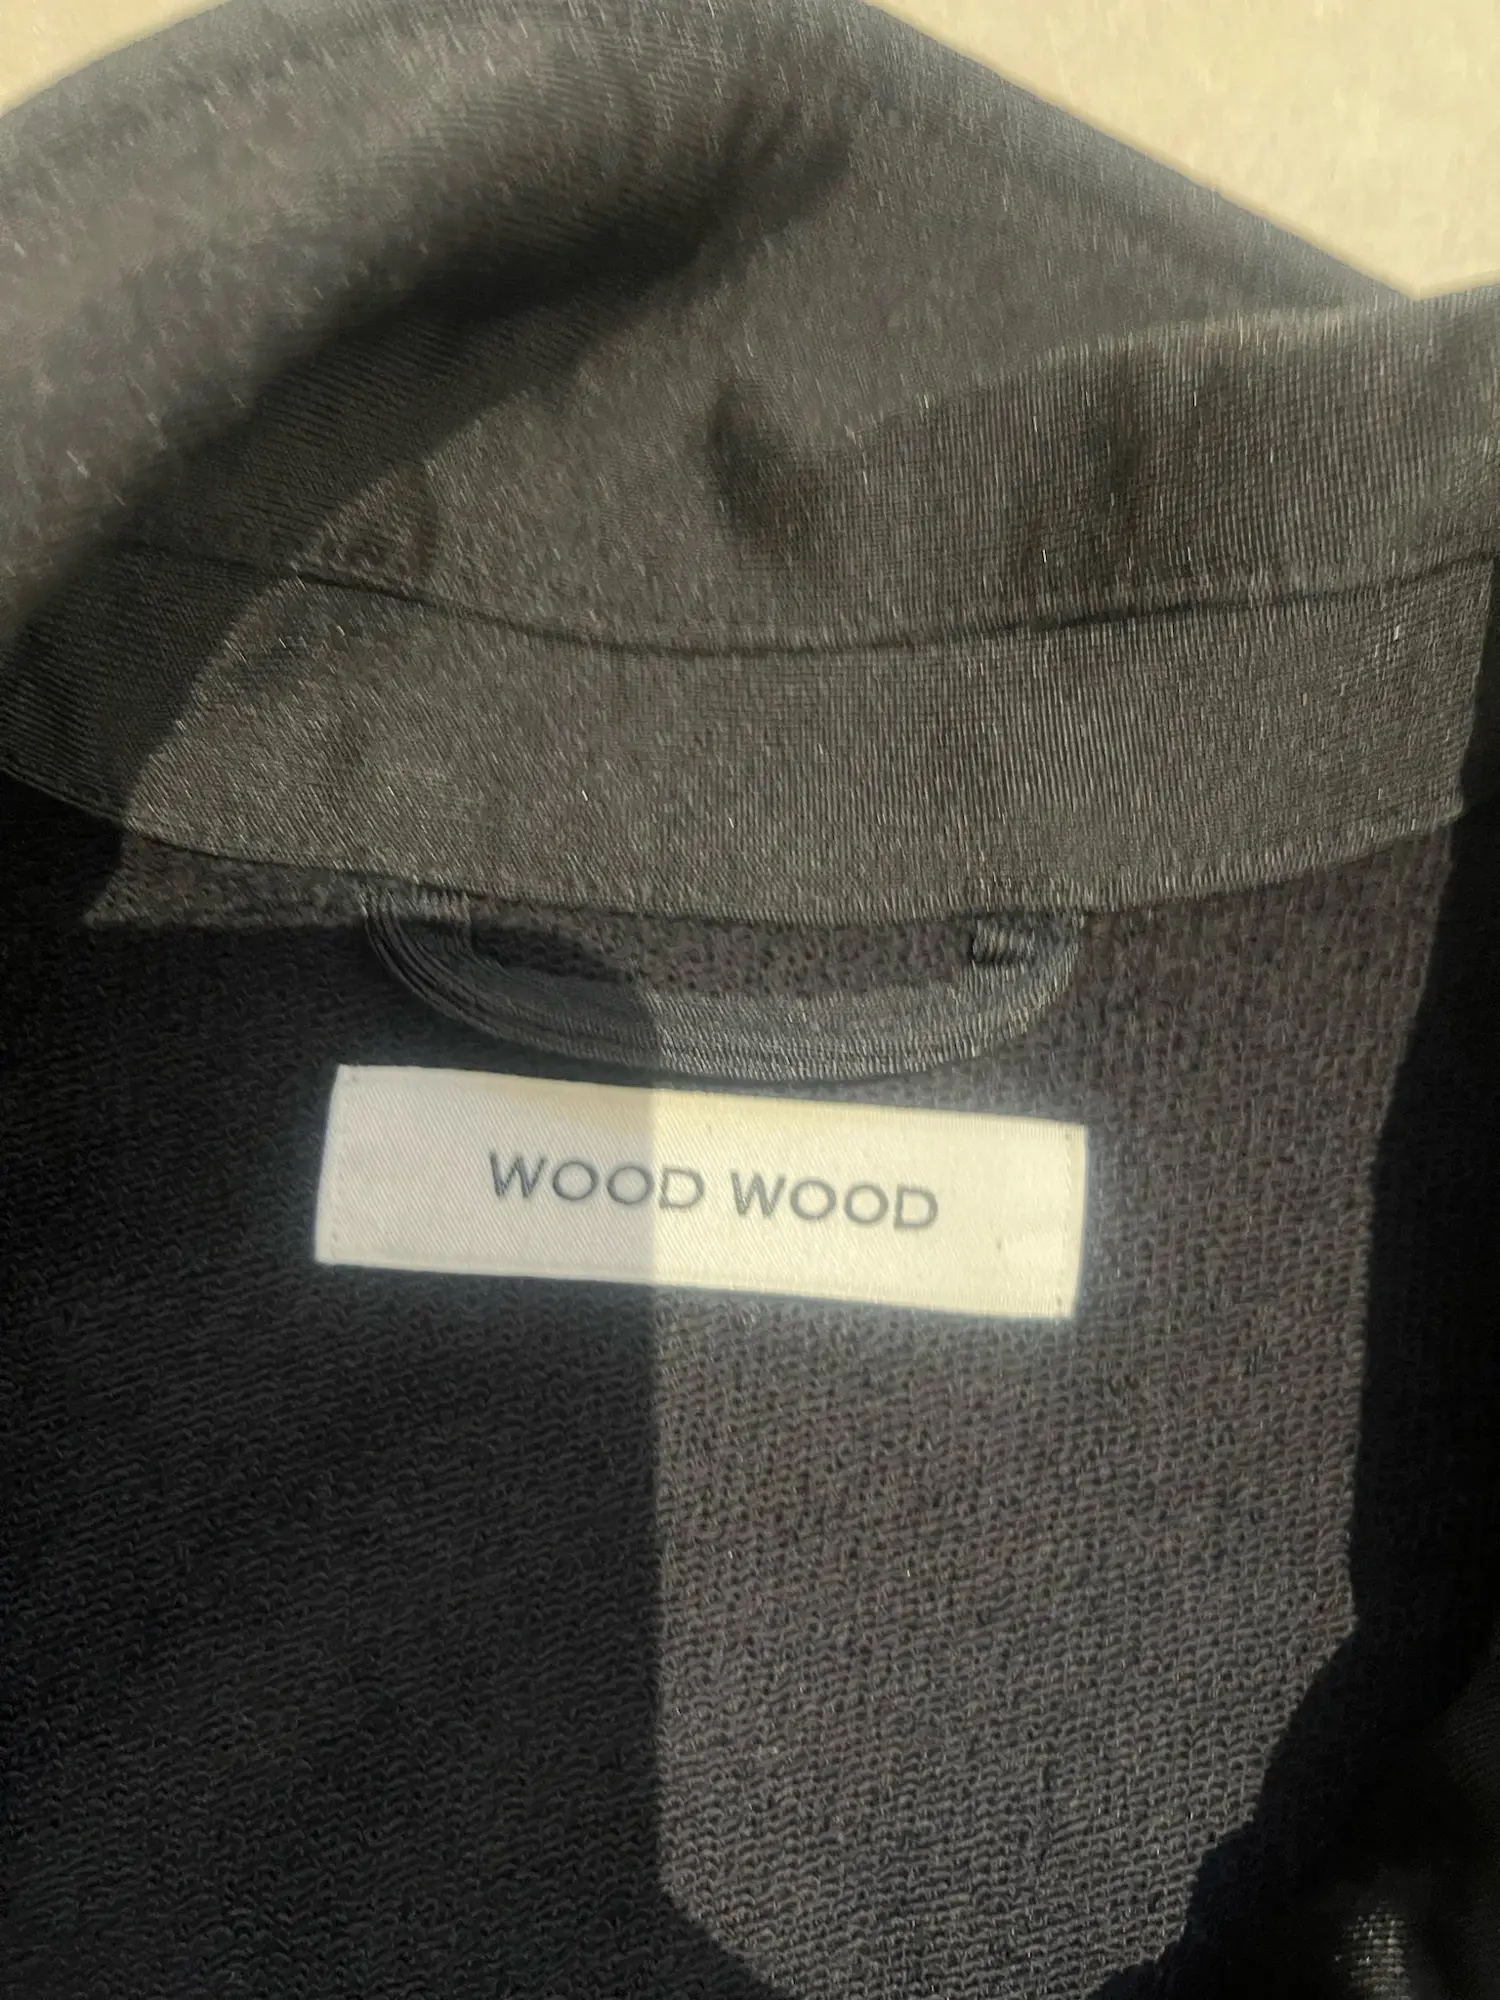 Wood Wood sweatshirt